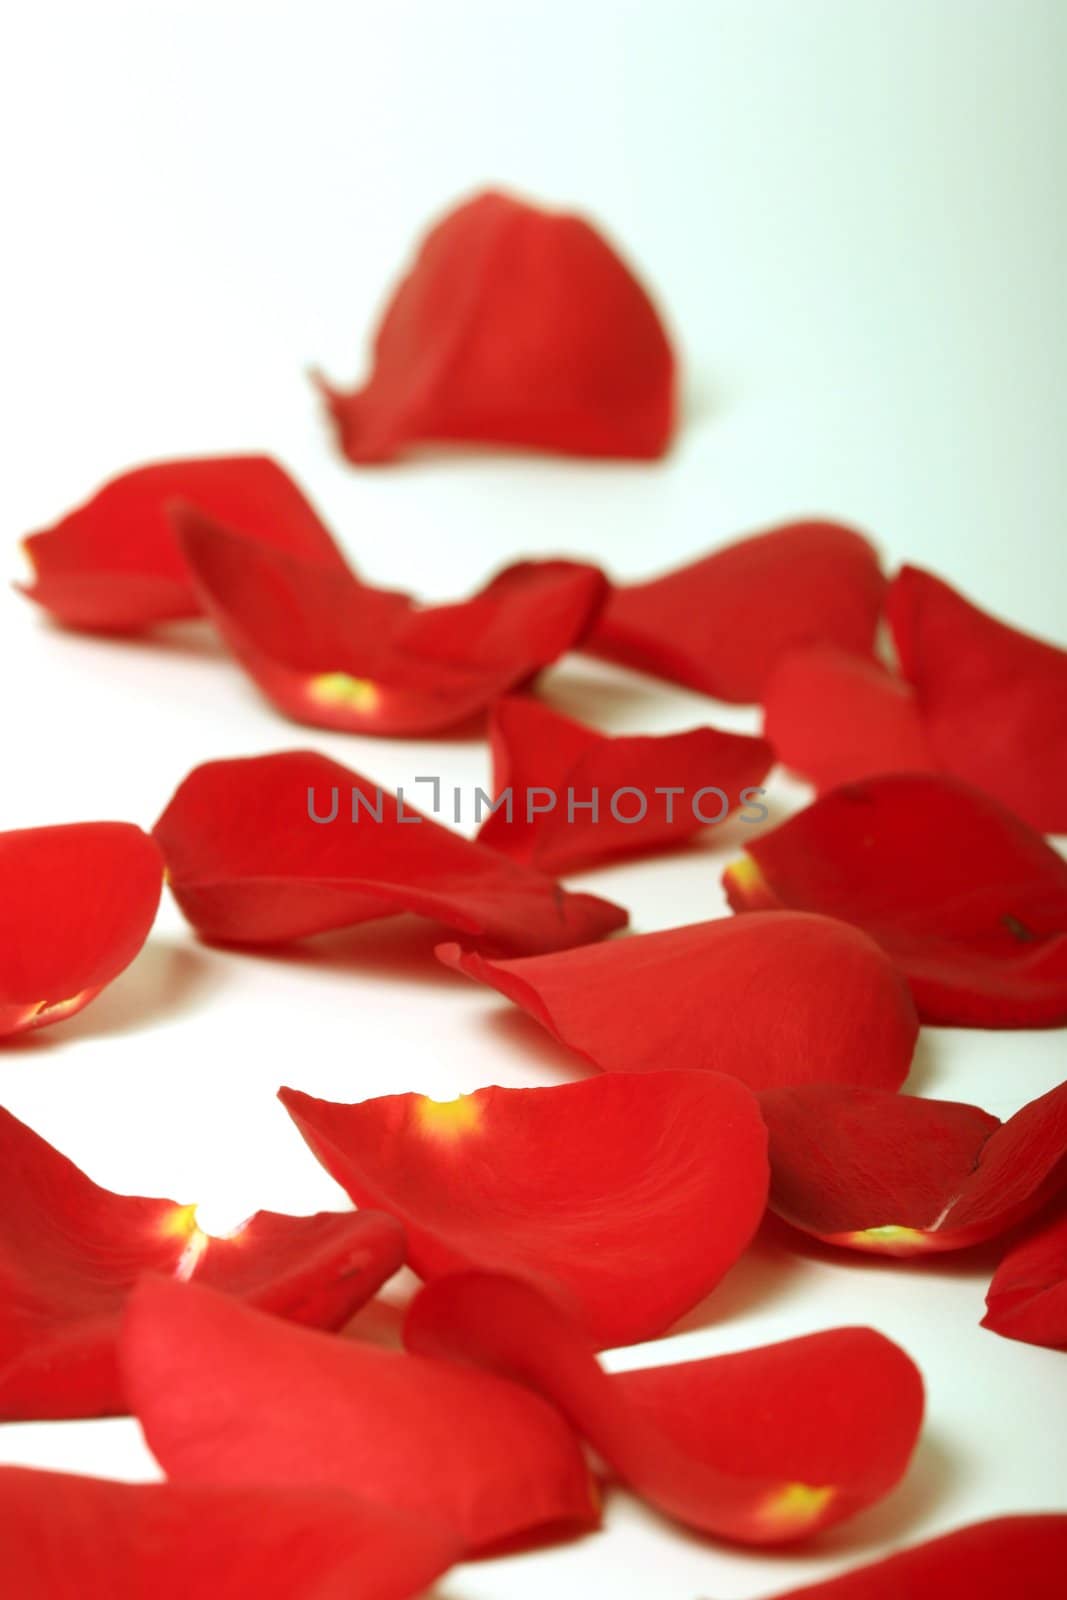 Romantic rose petals close-up - shallow depth of field